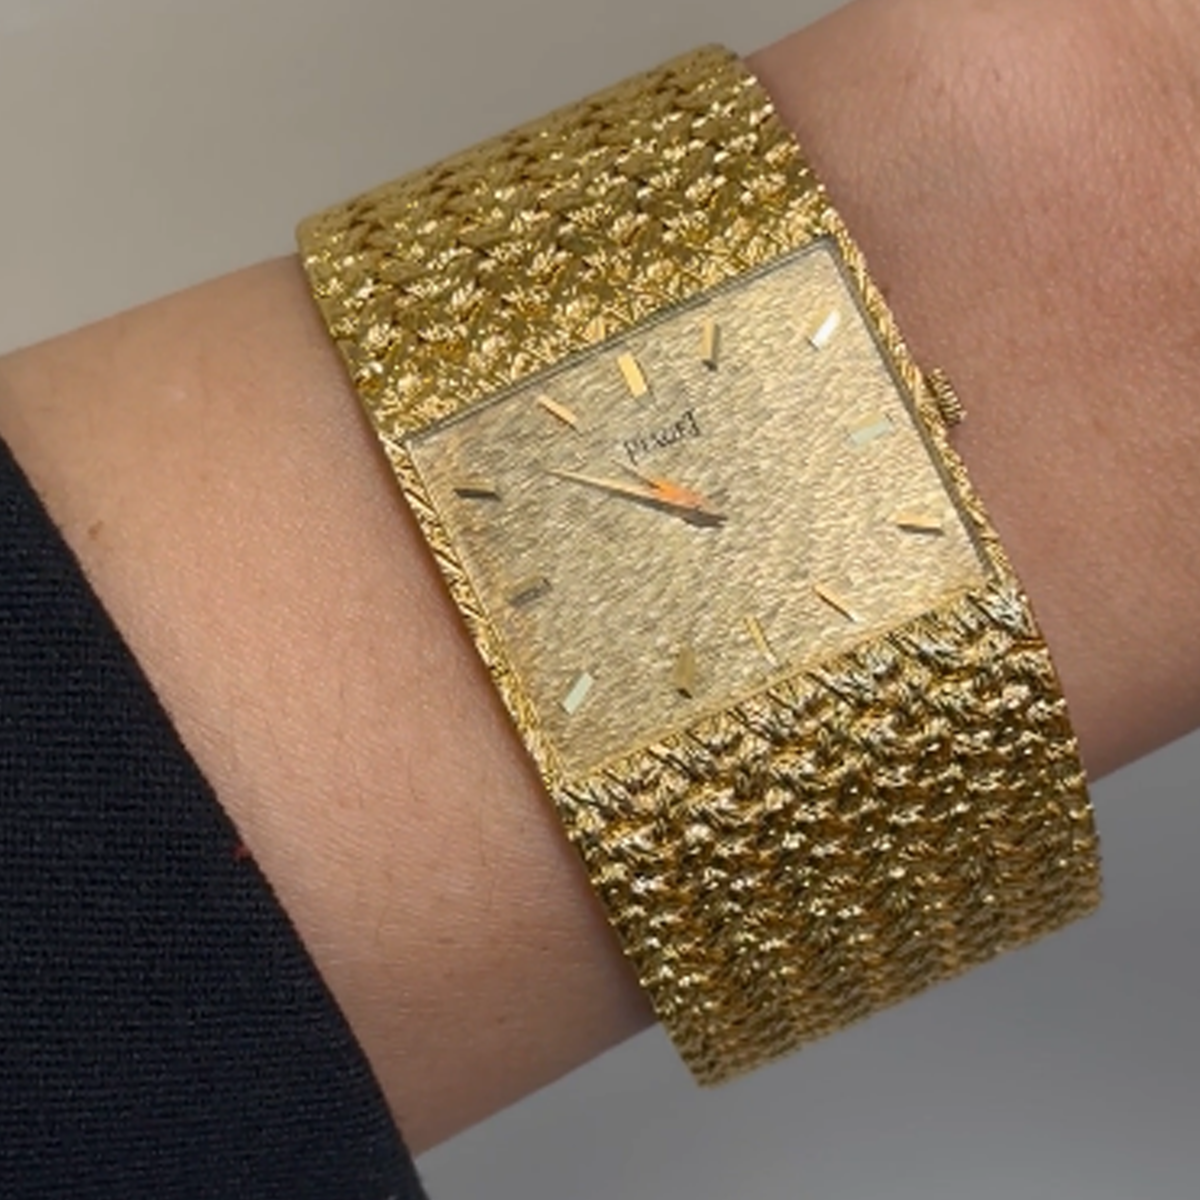 Piaget 1980s 18KT Yellow Gold Watch Bracelet close-up on wrist